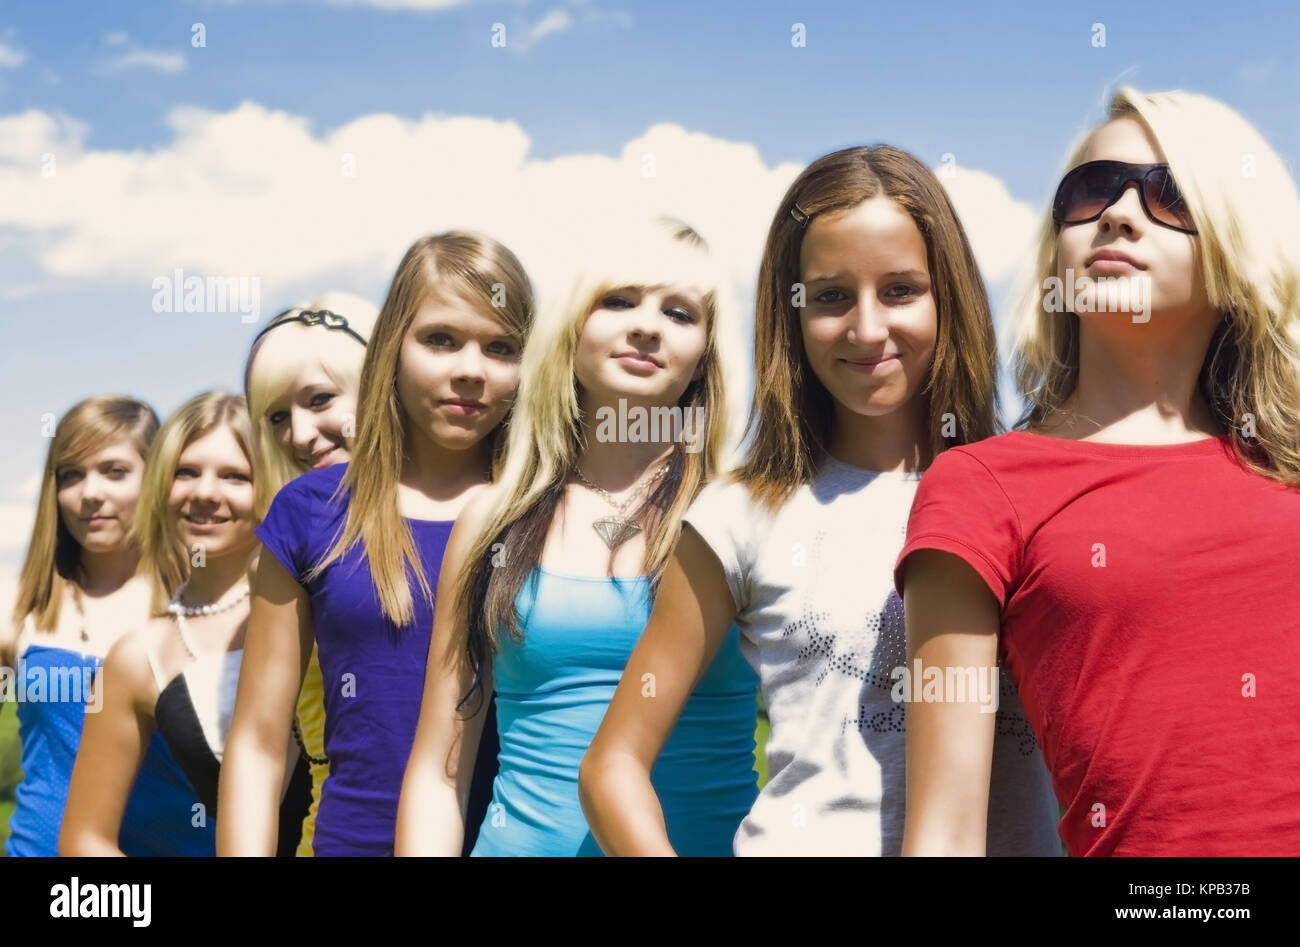 Model release, Jugendliche Maedchen - teenage girls Stock Photo